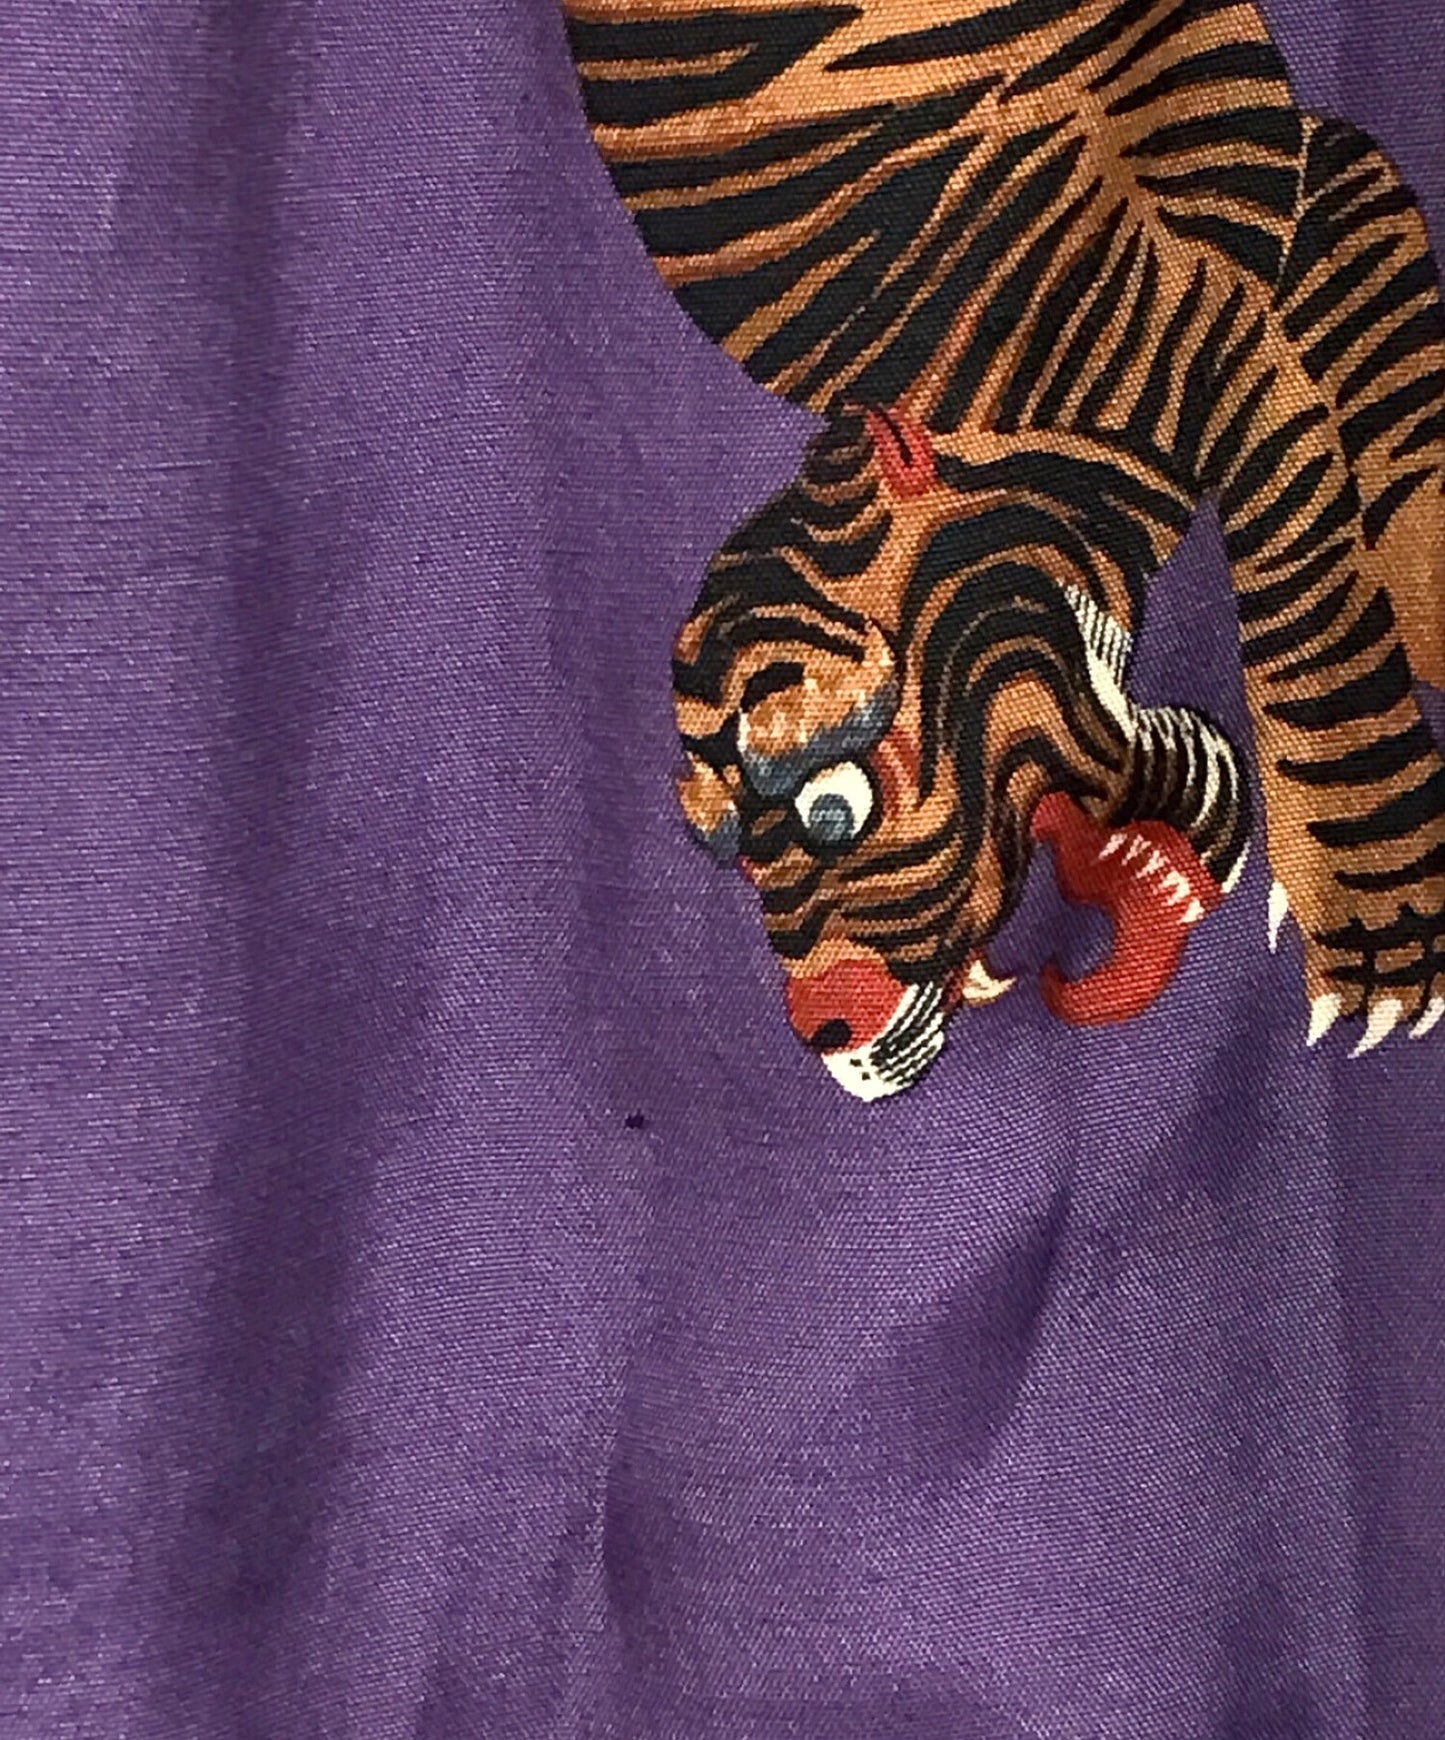 [Pre-owned] WACKO MARIA Tiger Print Aloha Shirt